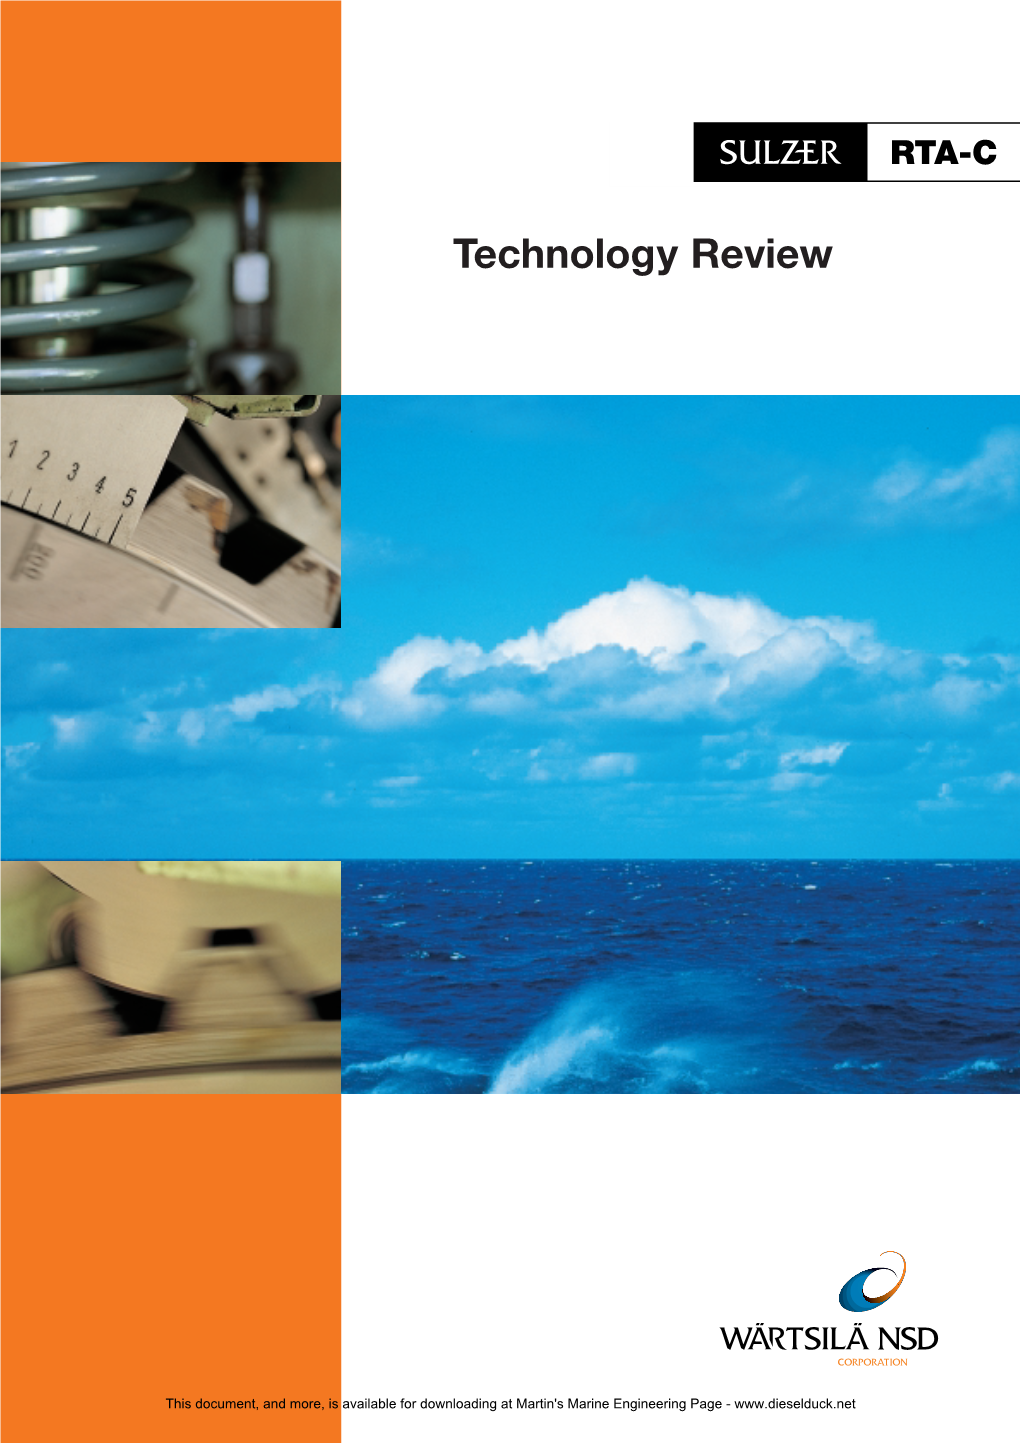 Sulzer RTA-C, Technology Review